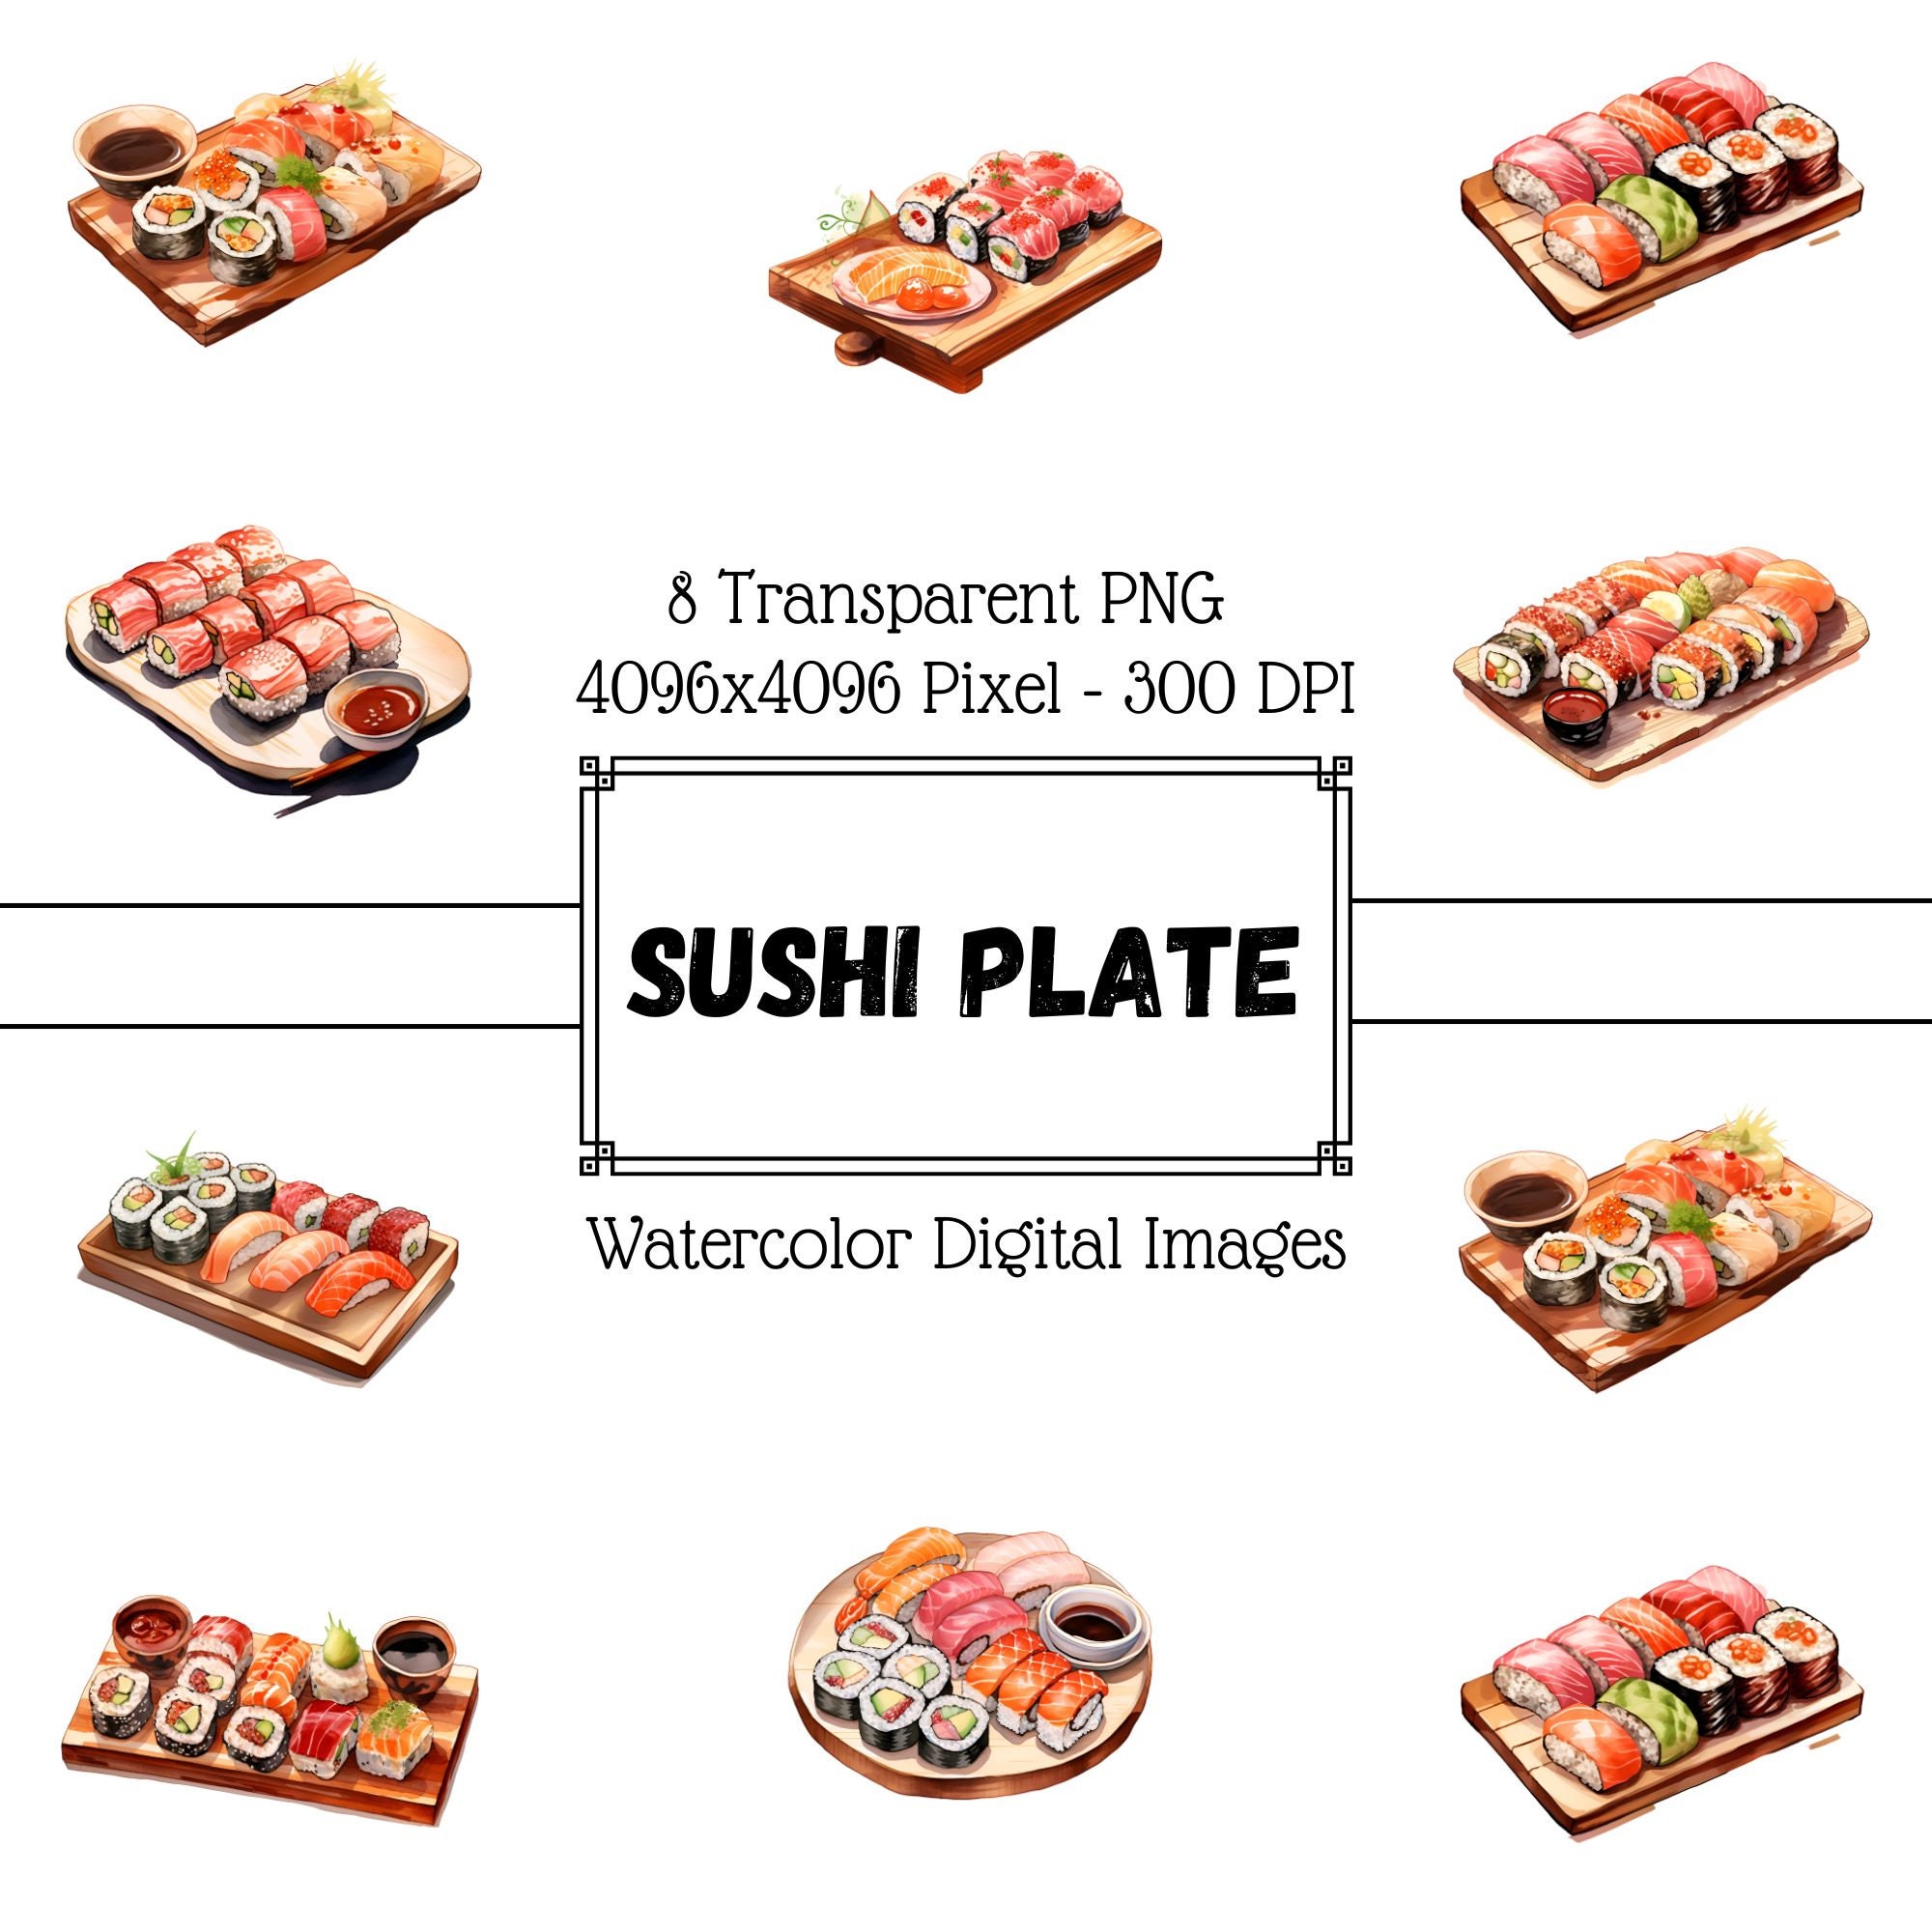 Hinkler Kawaii Sushi & Bento Box Set - Learn to Make Cute Sushi